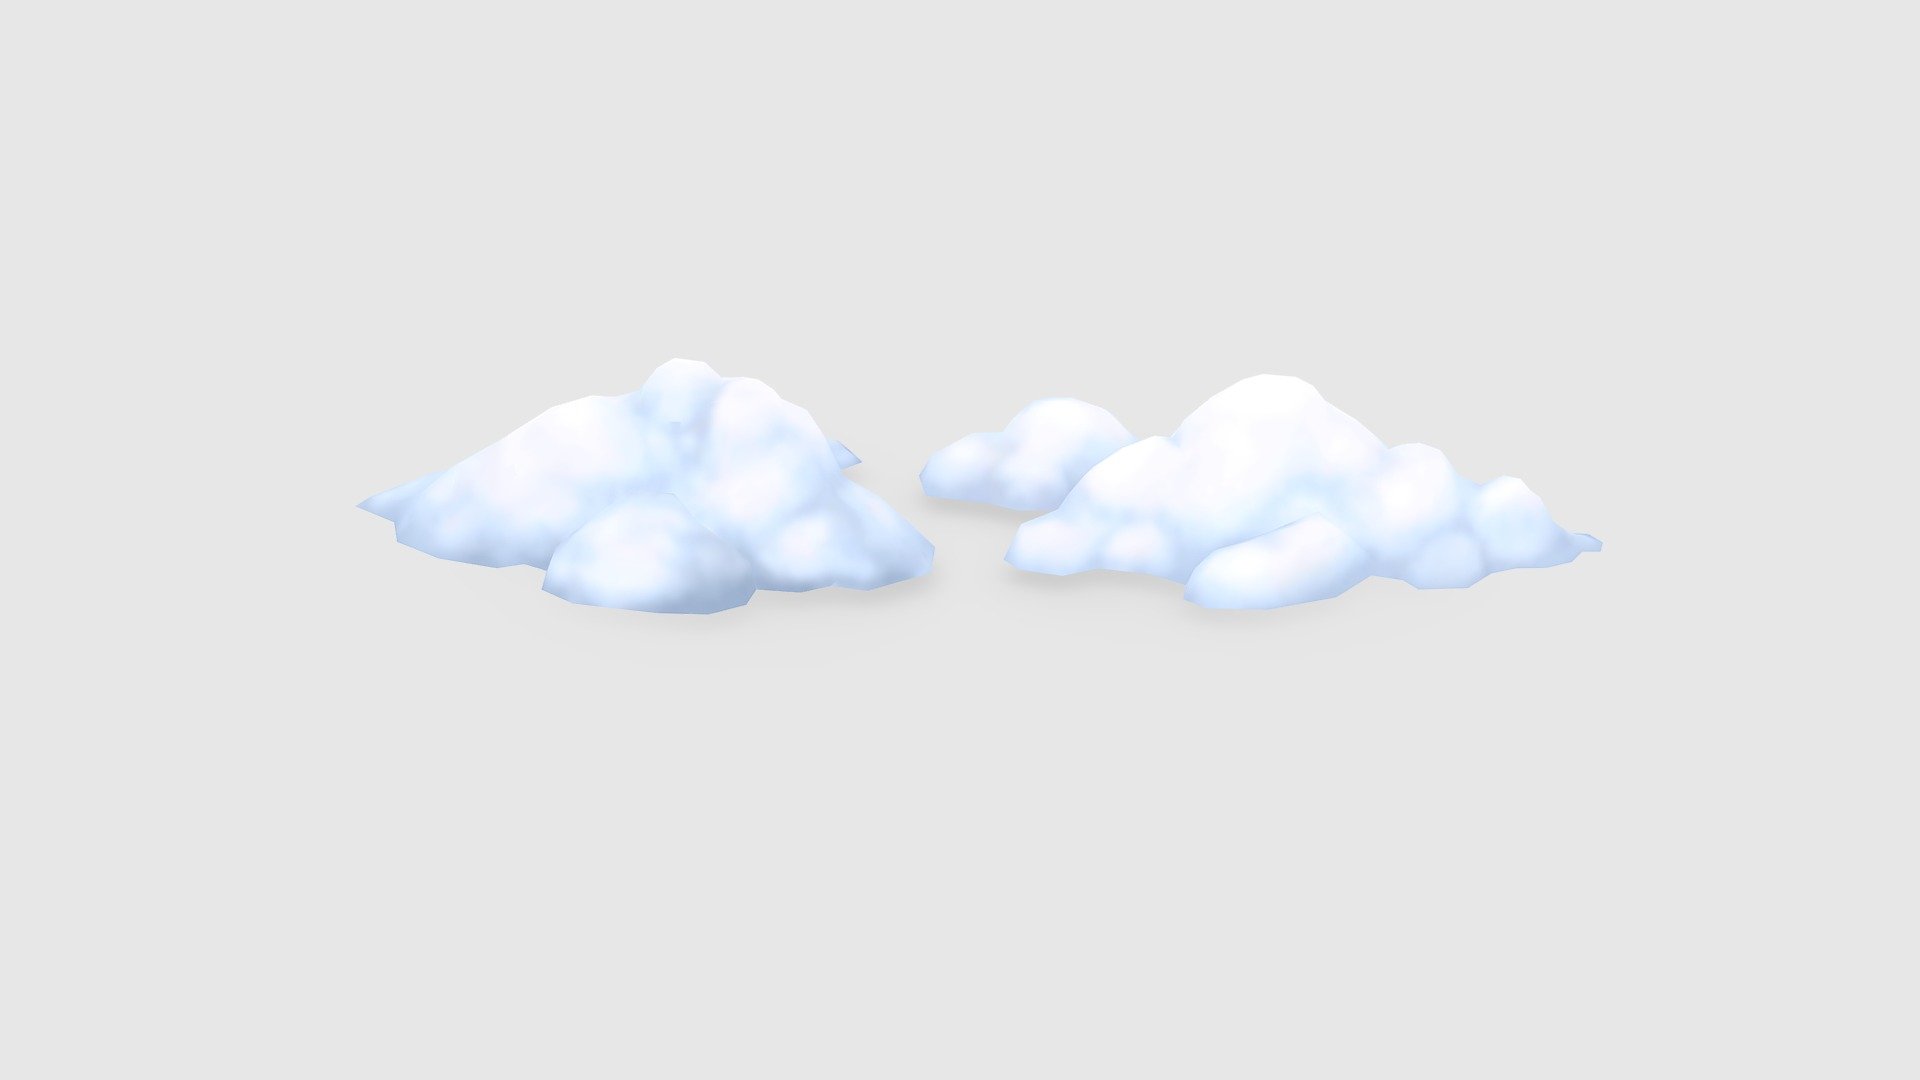 Cartoon clouds or snows Low-poly 3D model - Cartoon clouds or snows - 3D model by ler_cartoon (@lerrrrr) 3d model